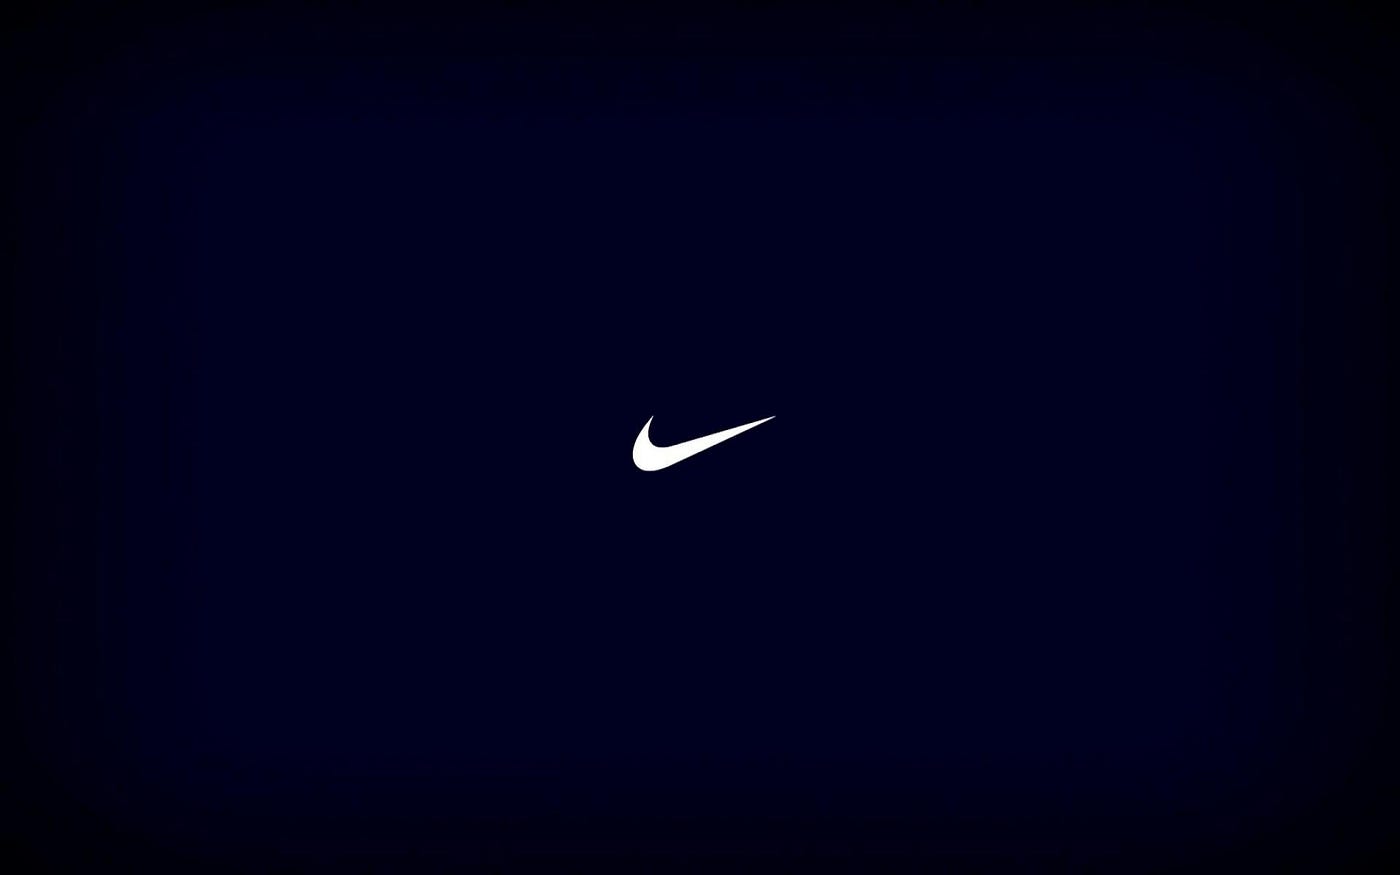 Nikes Marketing Strategies